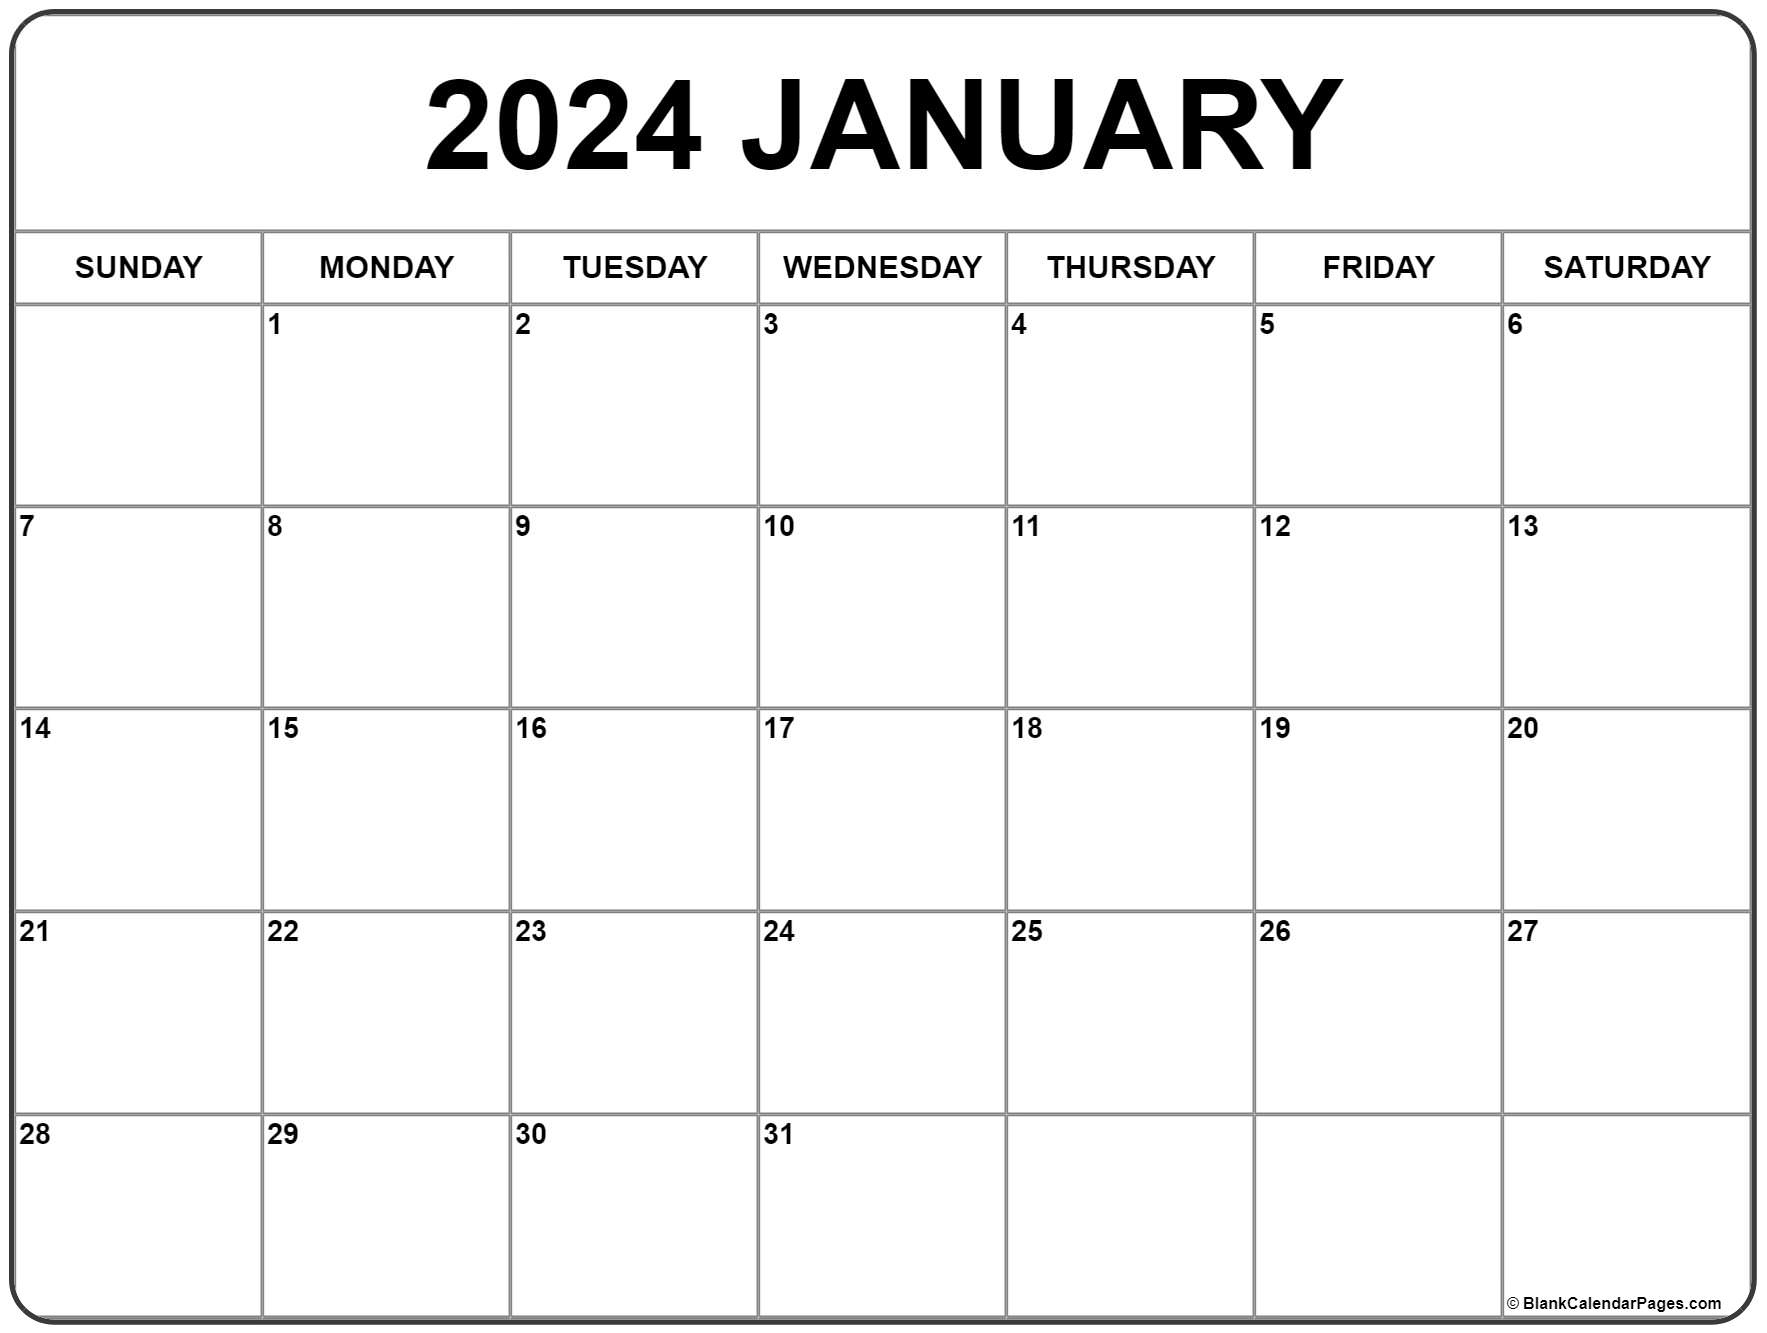 January 2024 Calendar | Free Printable Calendar | Printable Calendar Pages 2024 Free